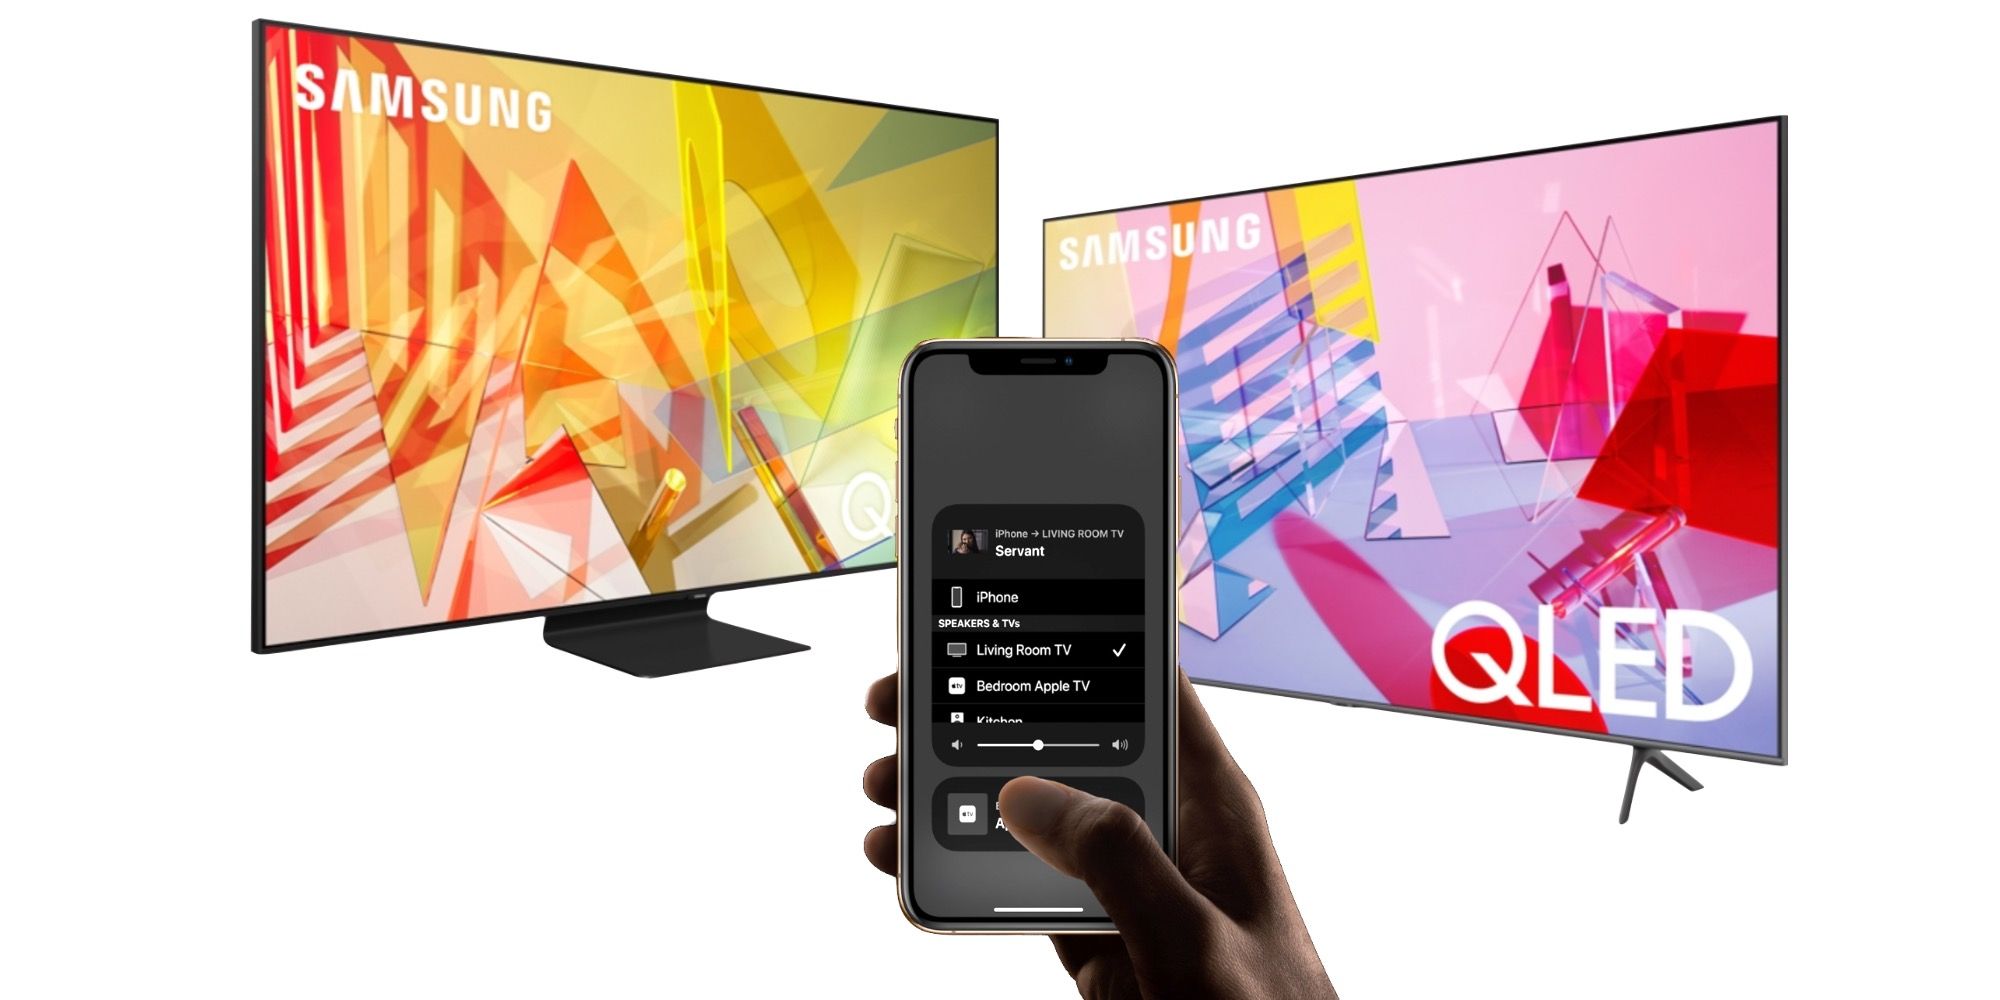 Smart TV Samsung compatibles con AirPlay 2 para transmitir desde iPhone